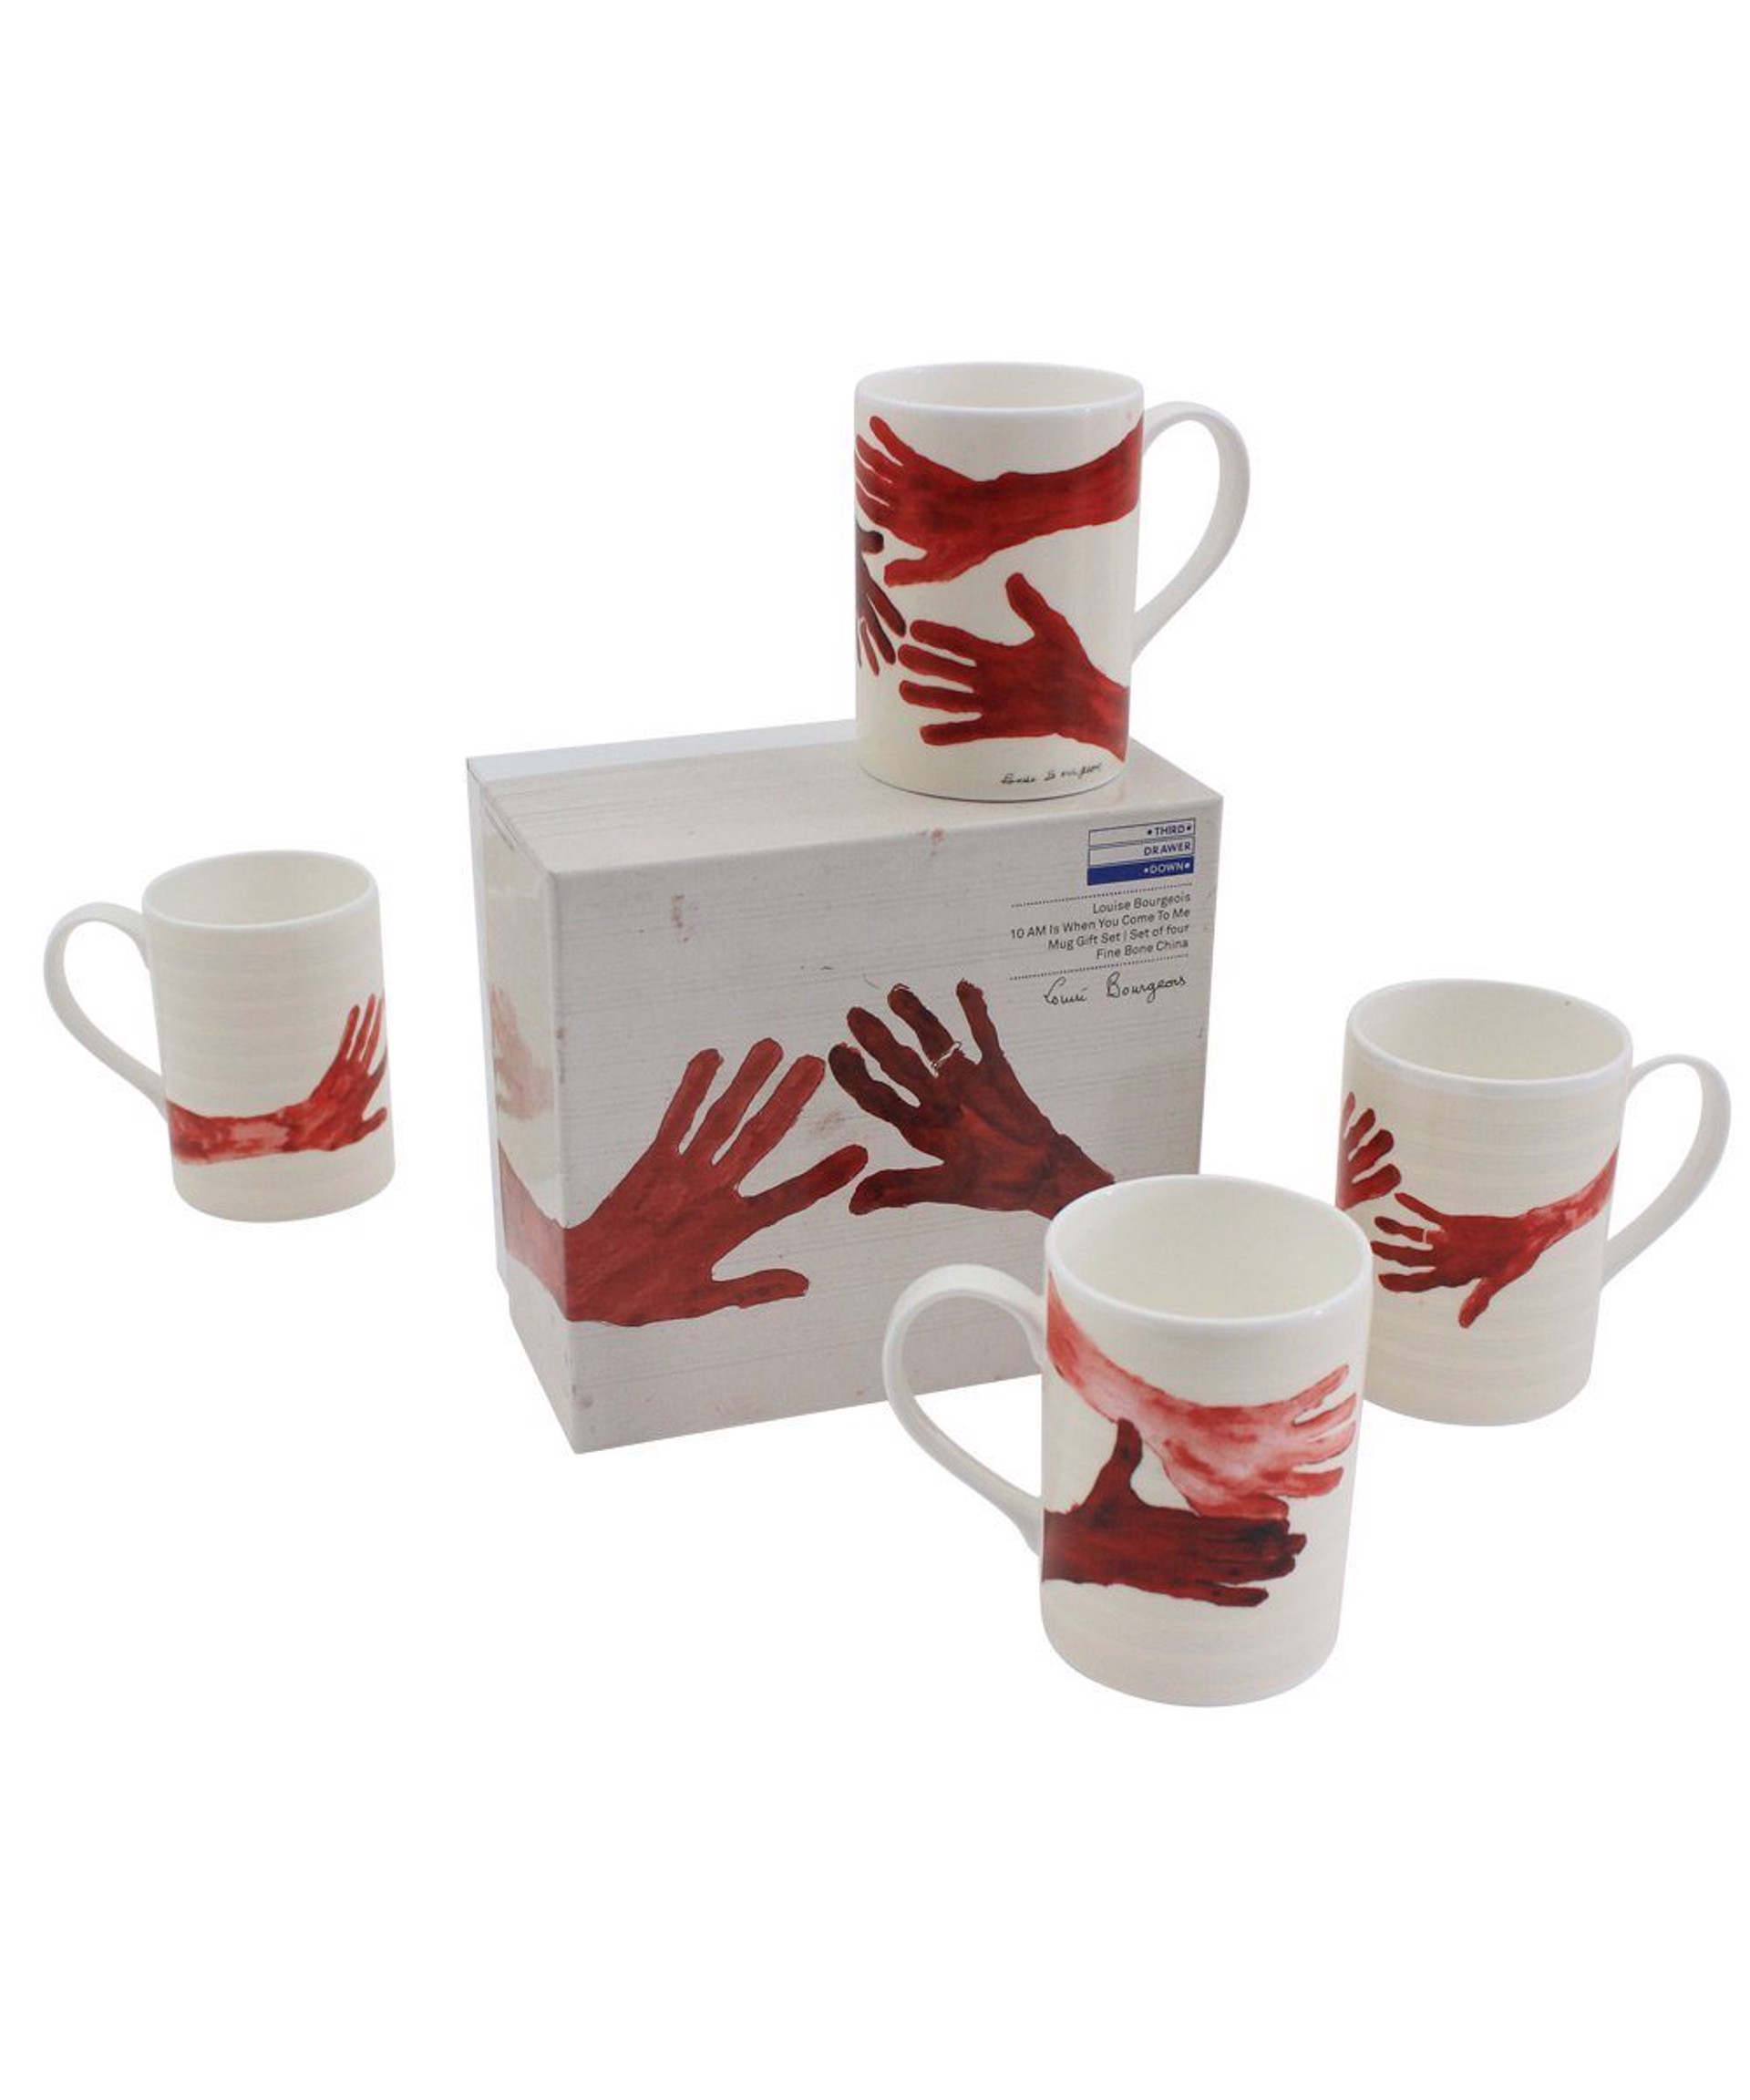 Mug Set by Louise Bourgeois